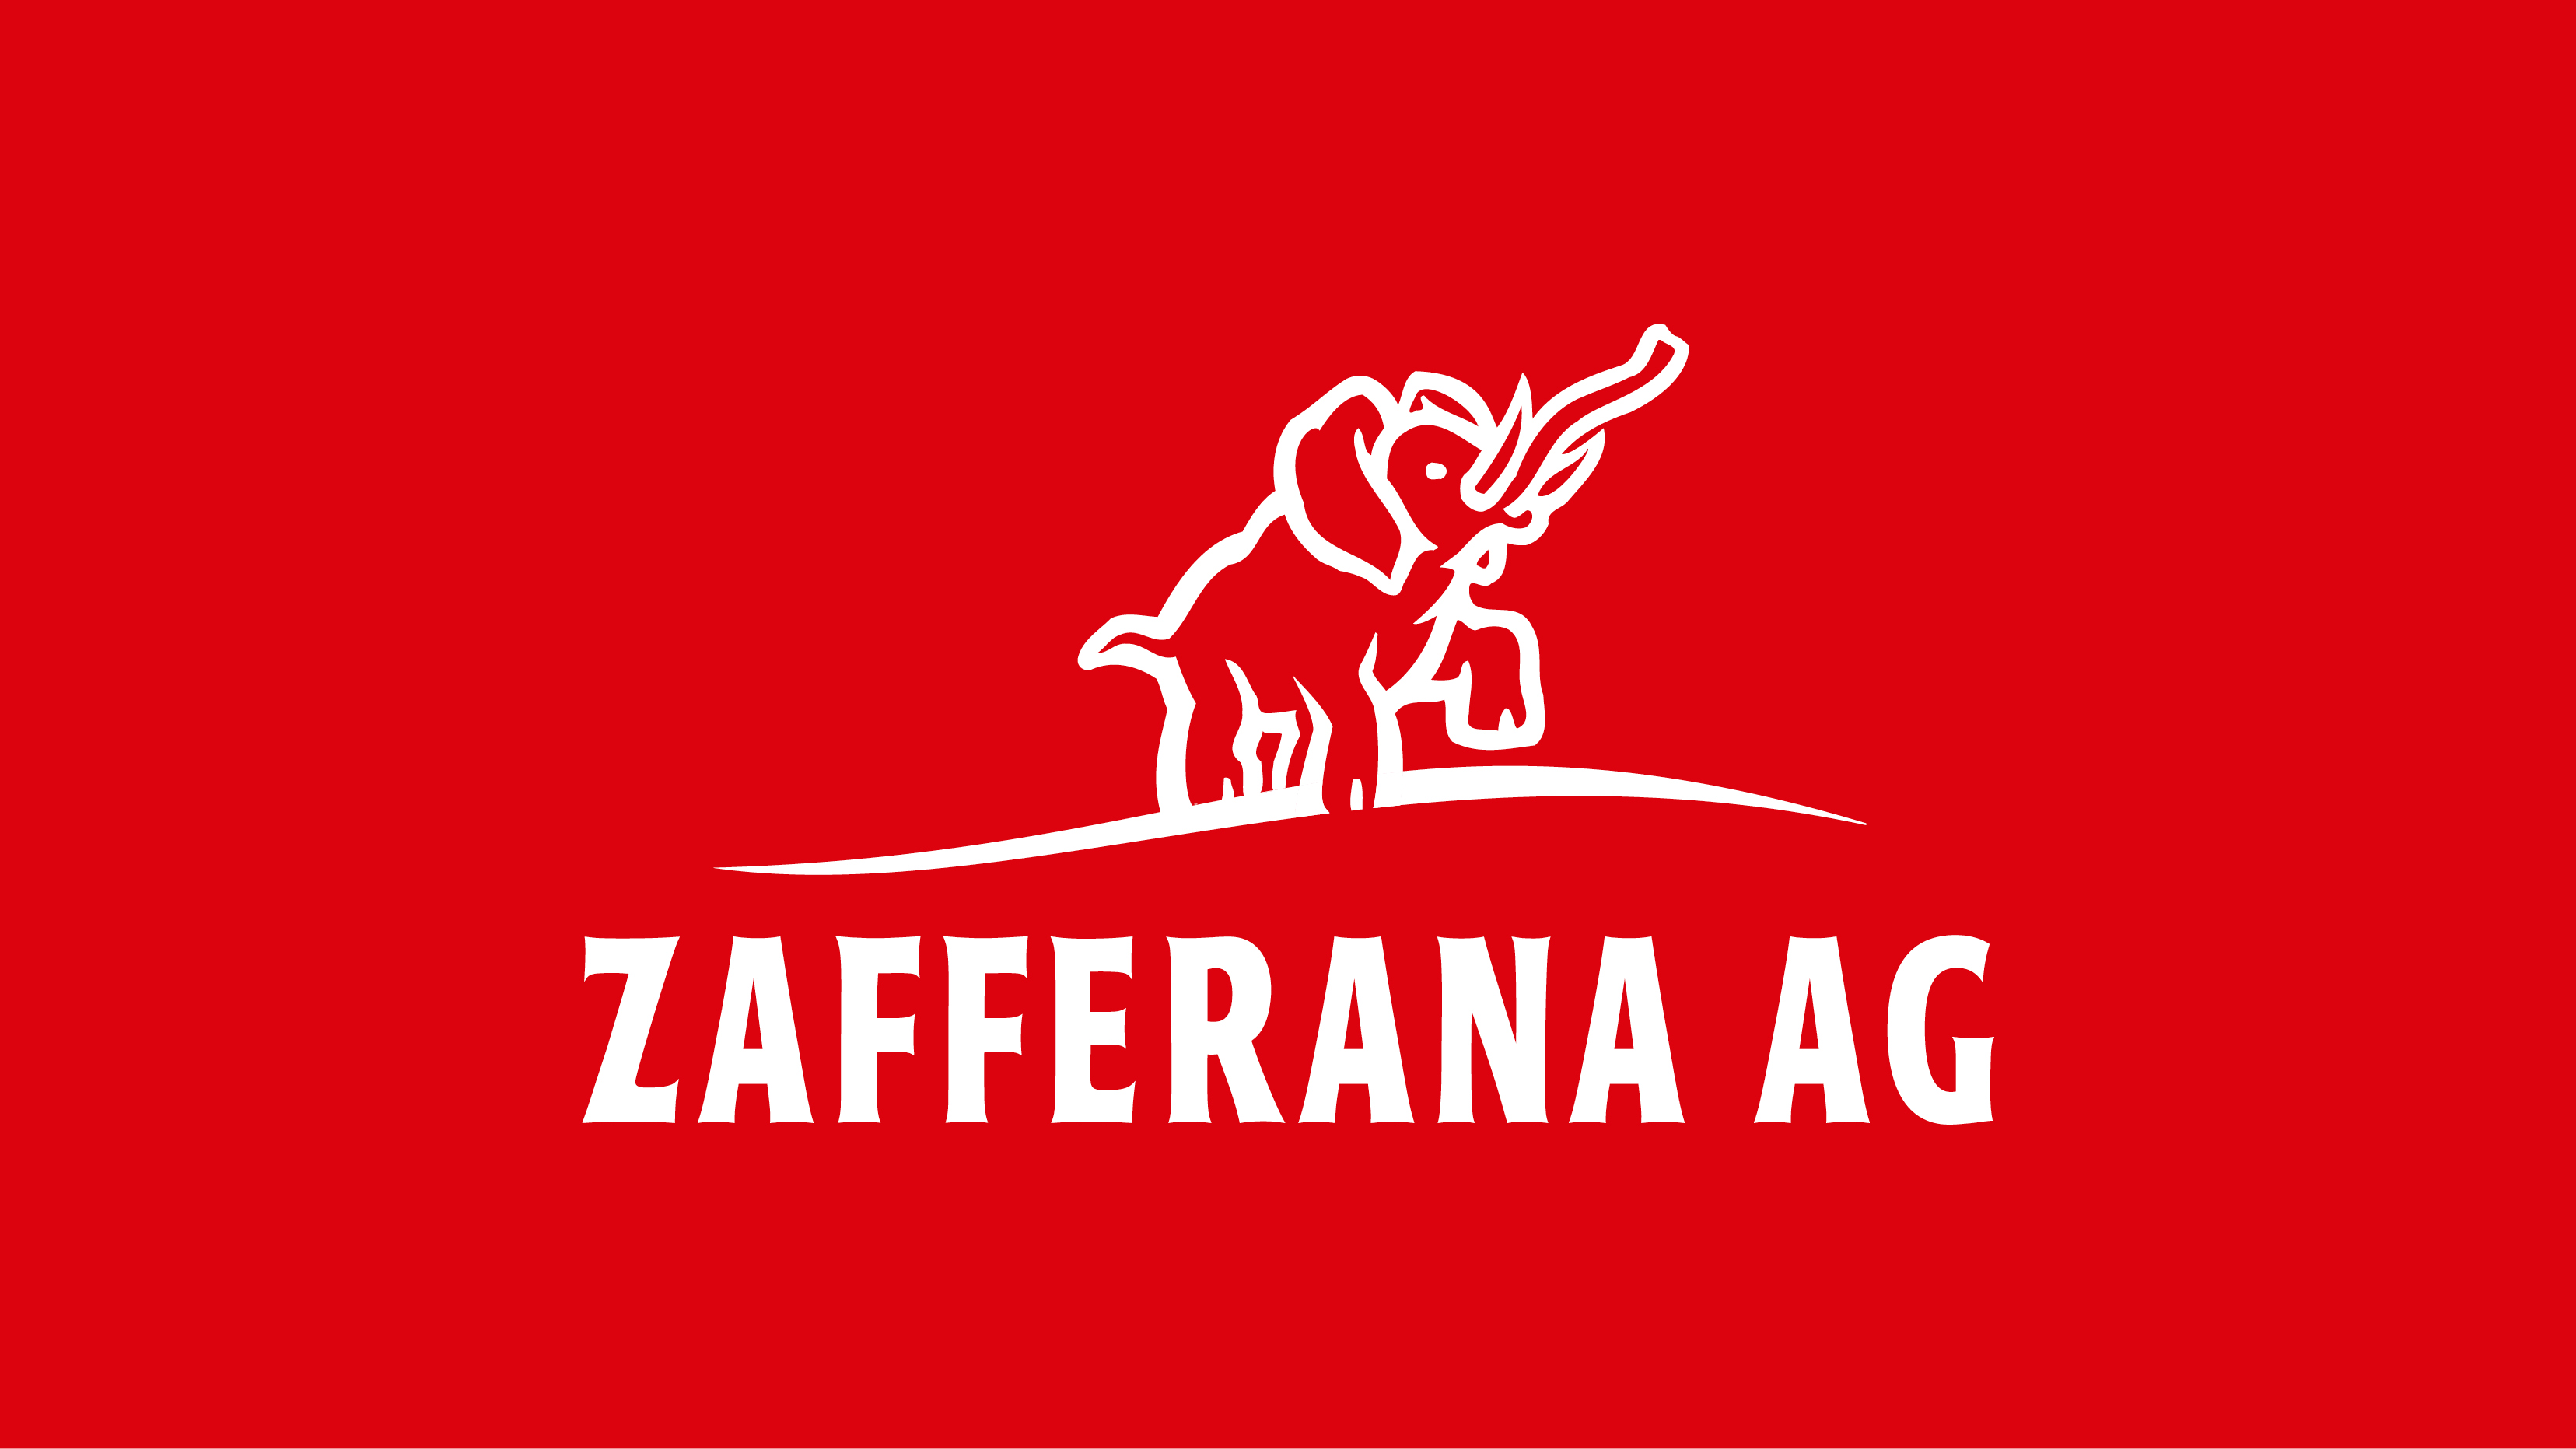 [Translate to Italian:] Zafferana AG